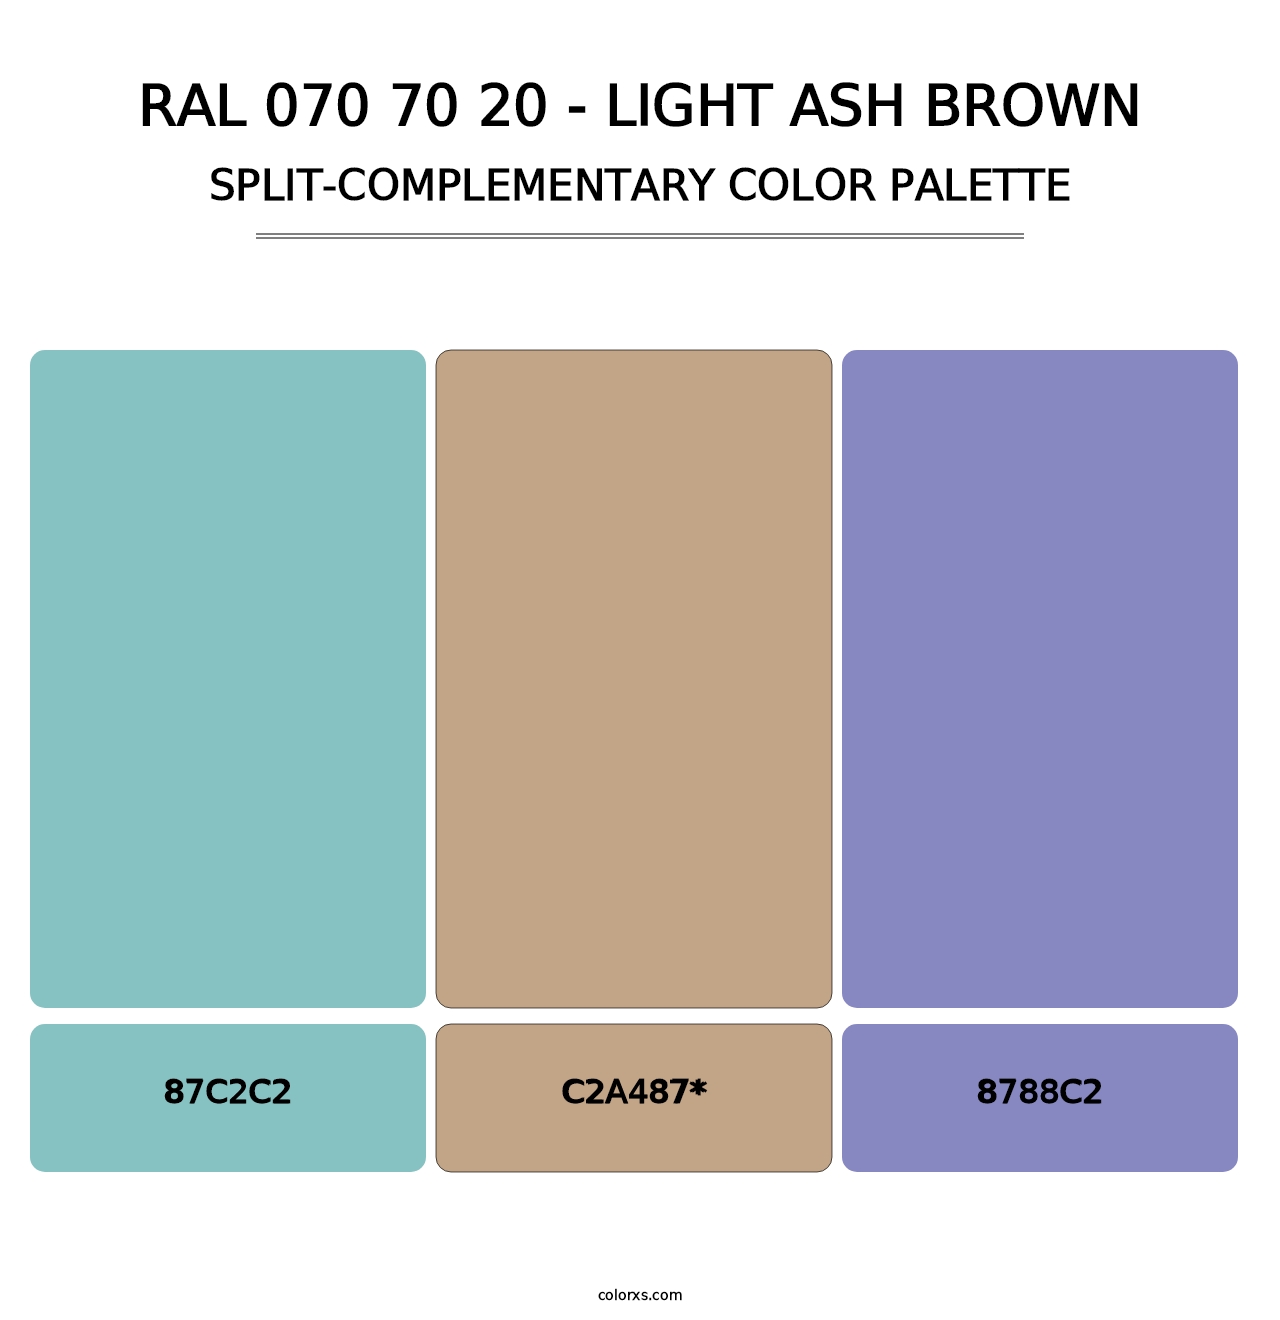 RAL 070 70 20 - Light Ash Brown - Split-Complementary Color Palette